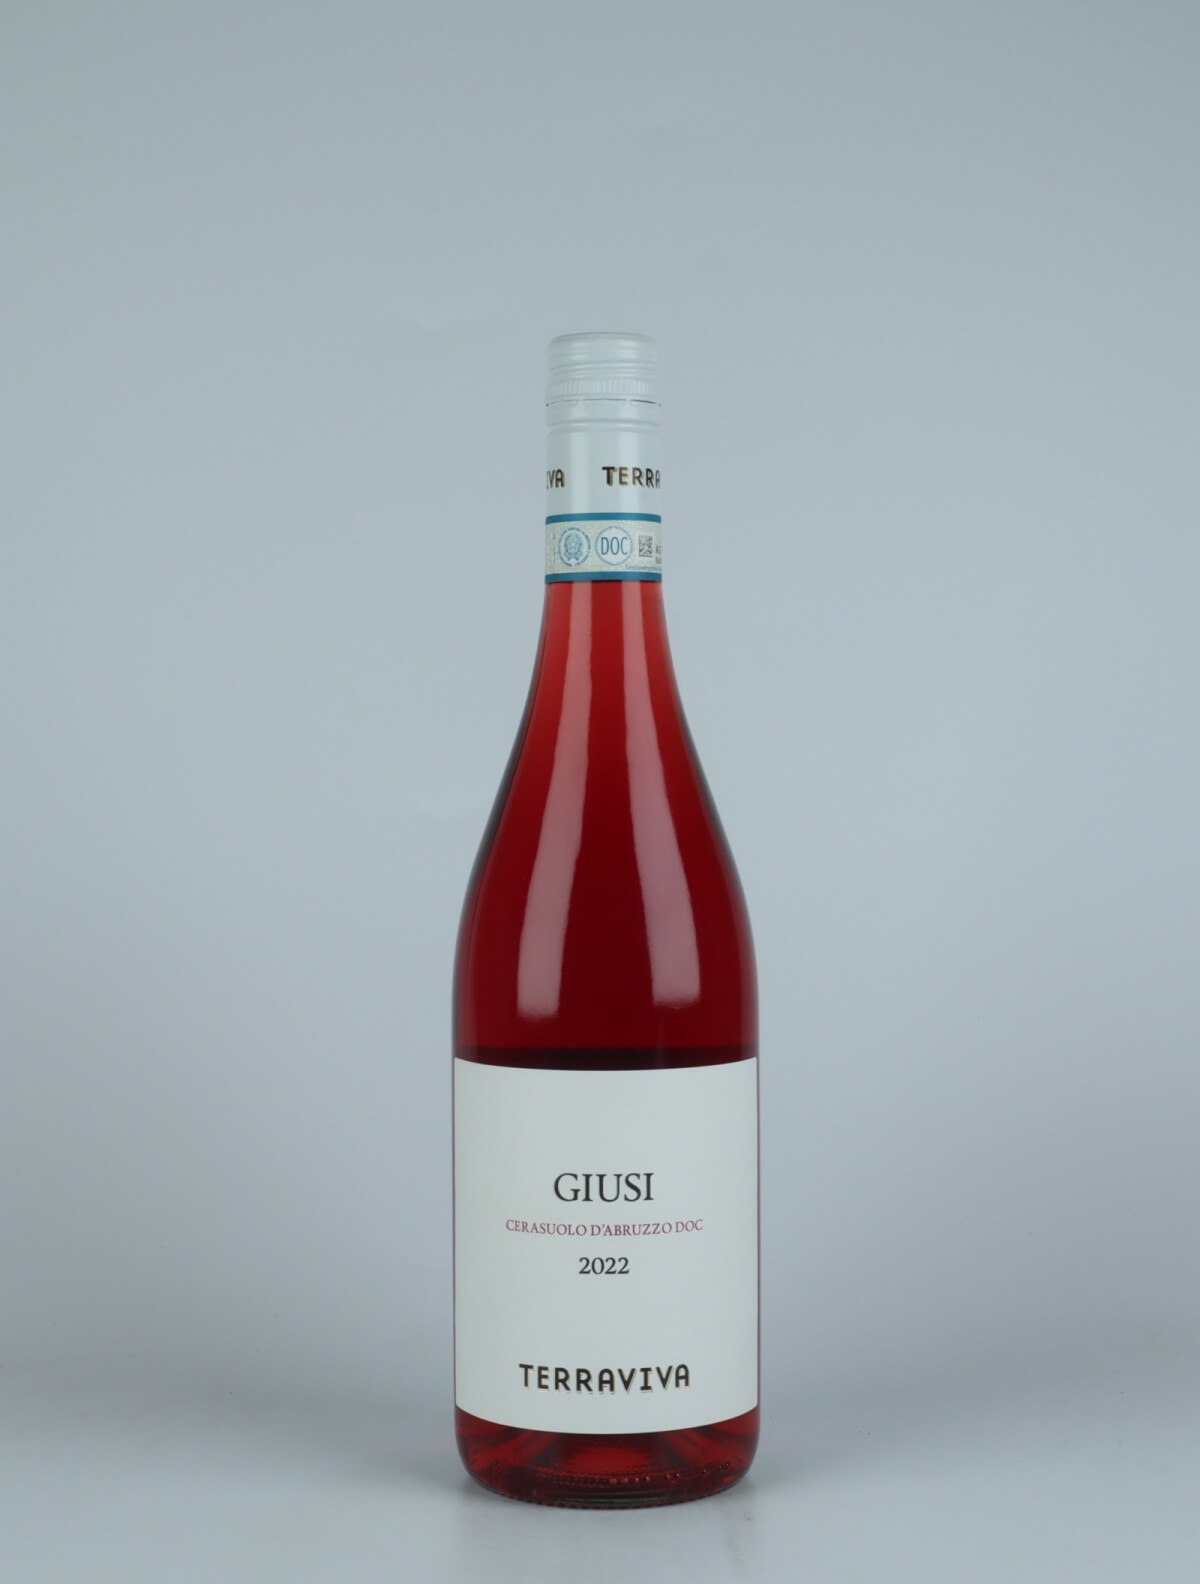 En flaske 2022 Giusi - Rosé Rosé fra Tenuta Terraviva, Abruzzo i Italien